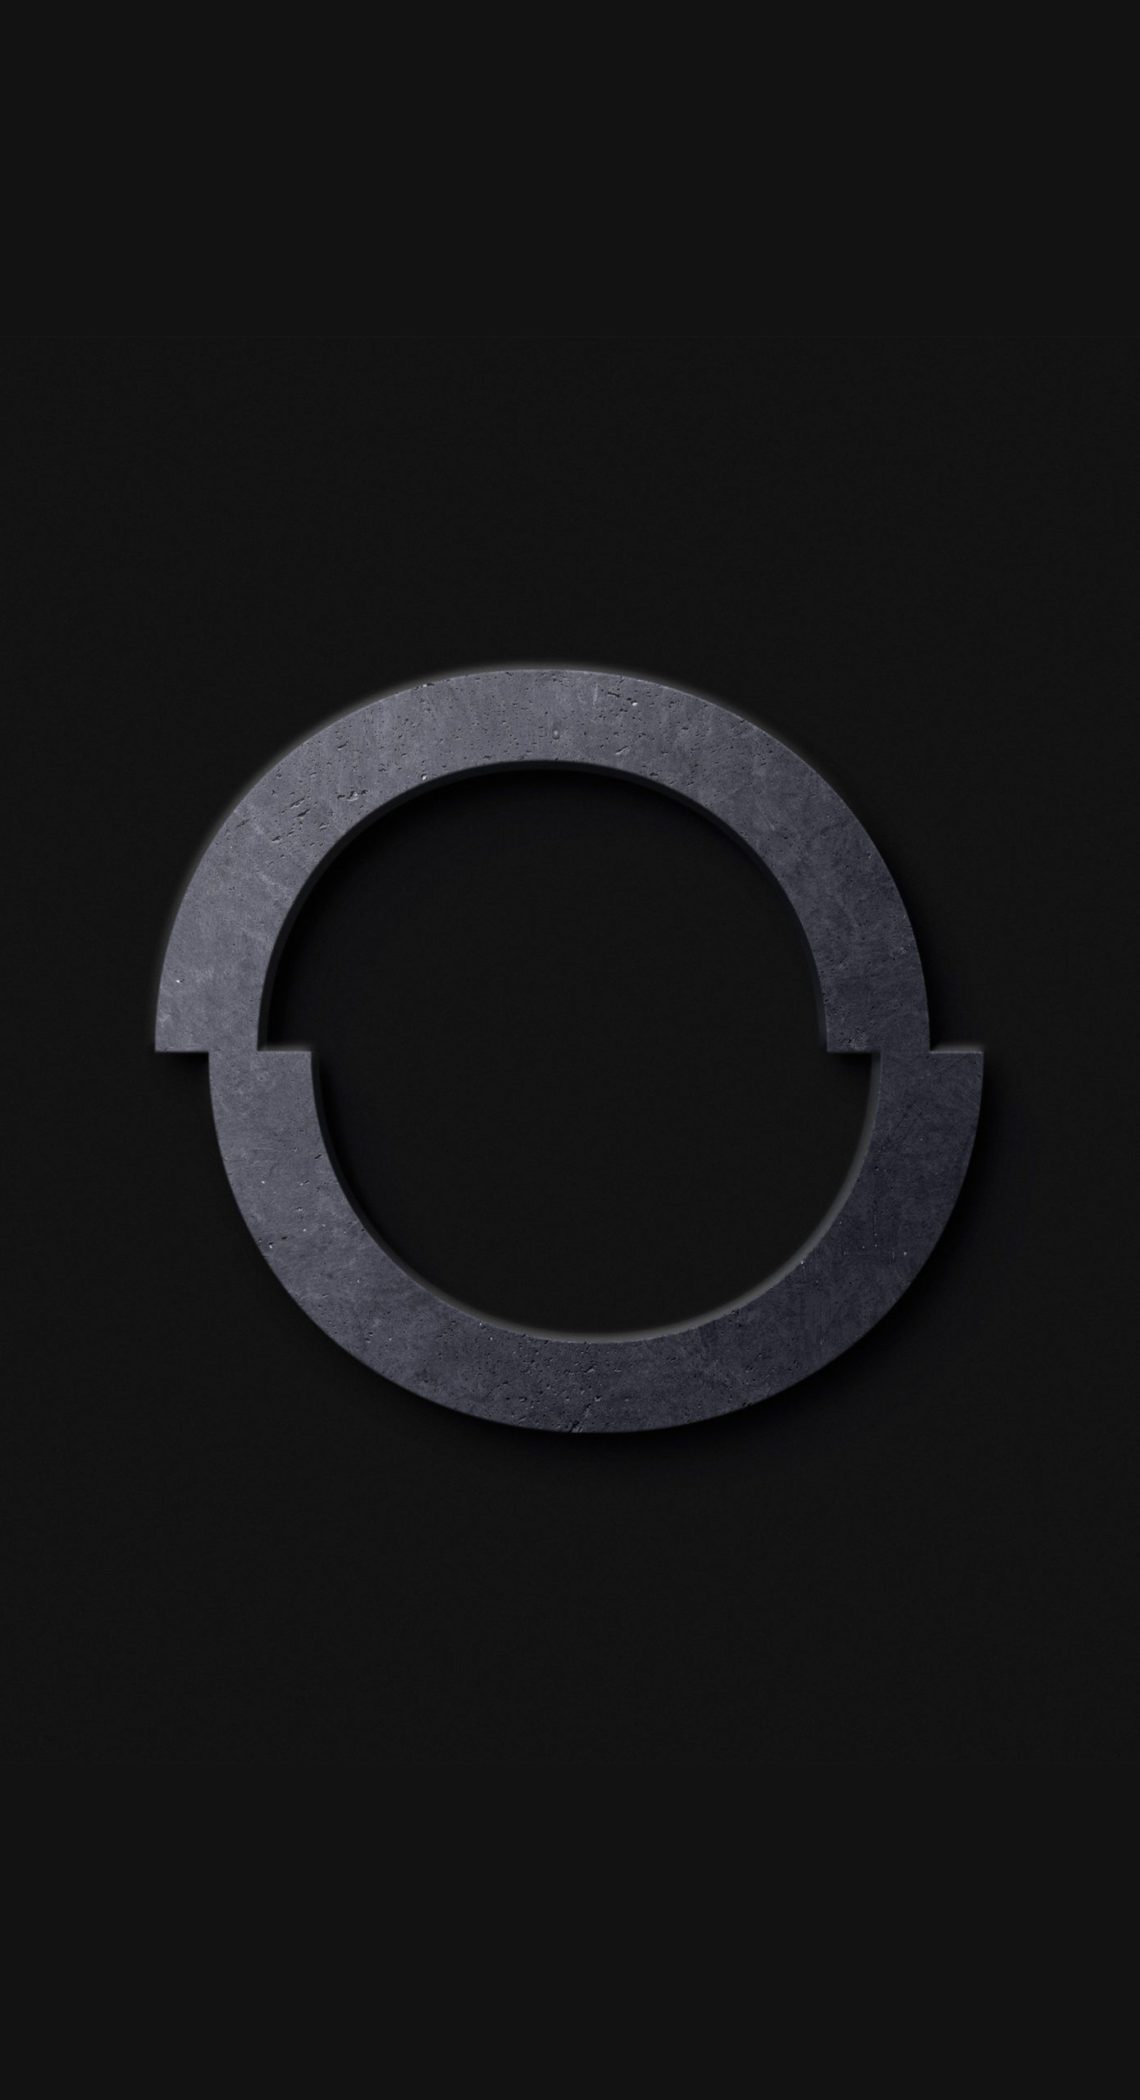 Chiron concrete 3D logo designed by ipulse creative agency Hong Kong